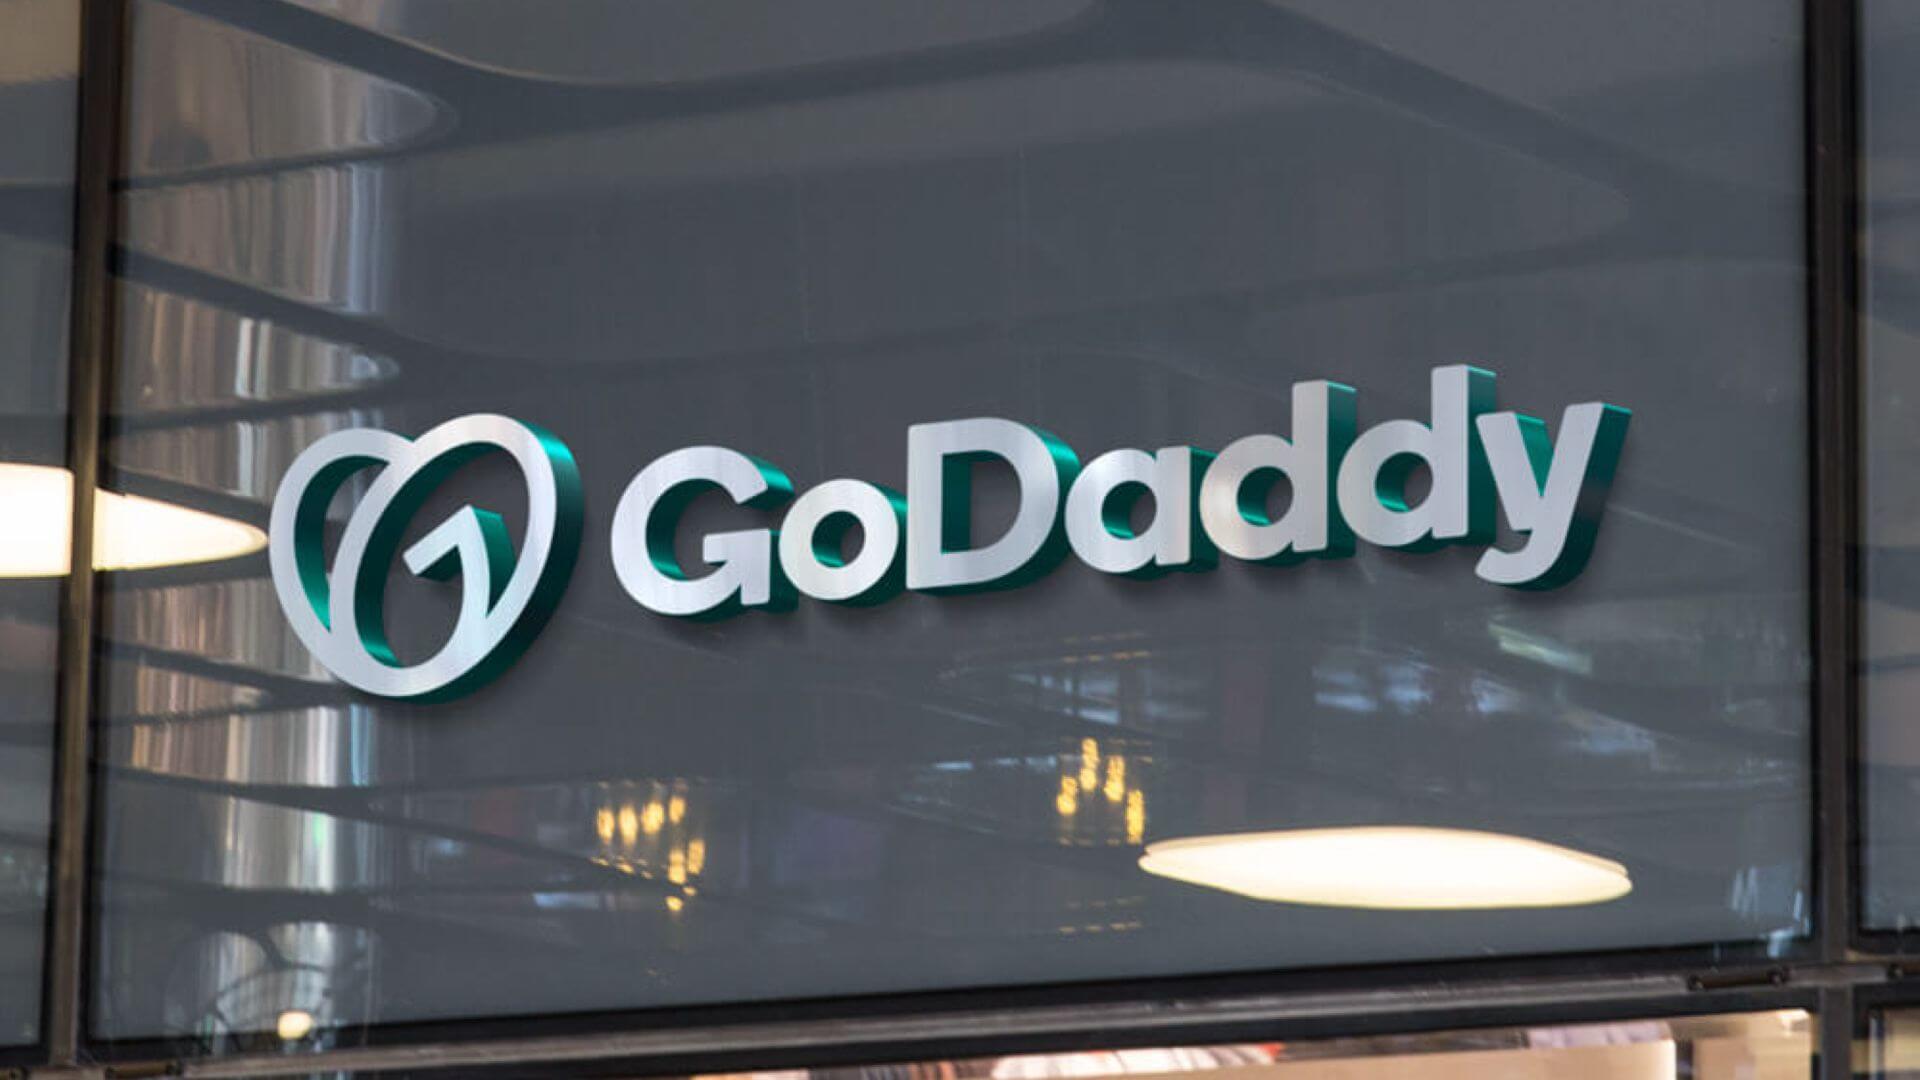 Web hosting company GoDaddy Inc